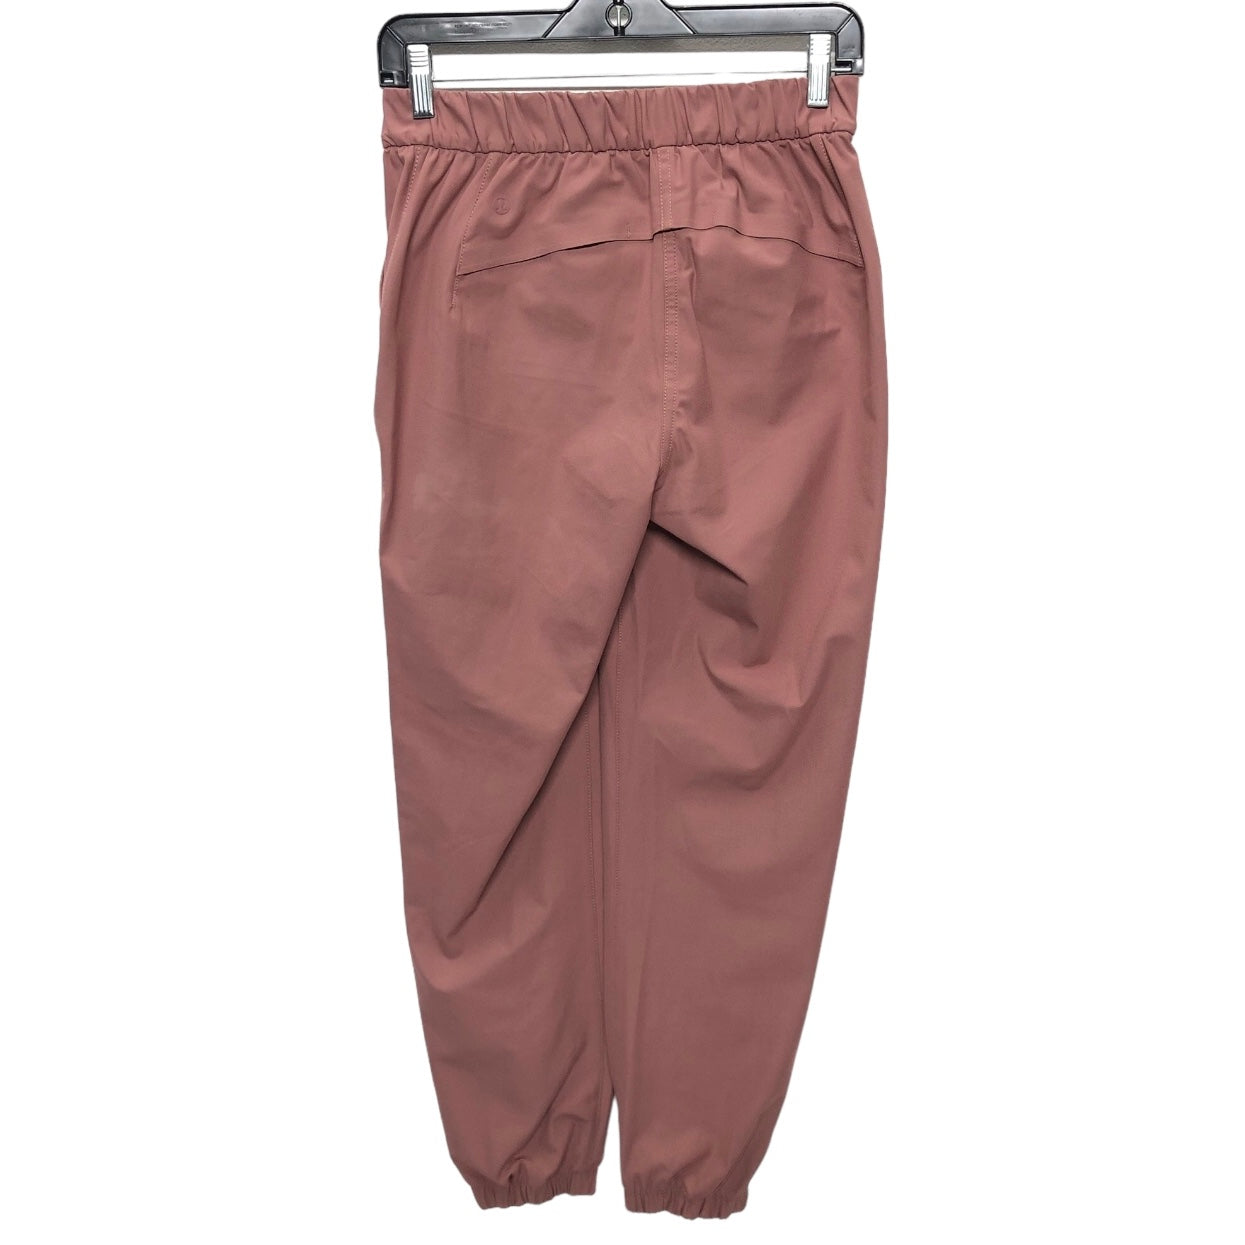 Mauve Athletic Pants Lululemon, Size 2